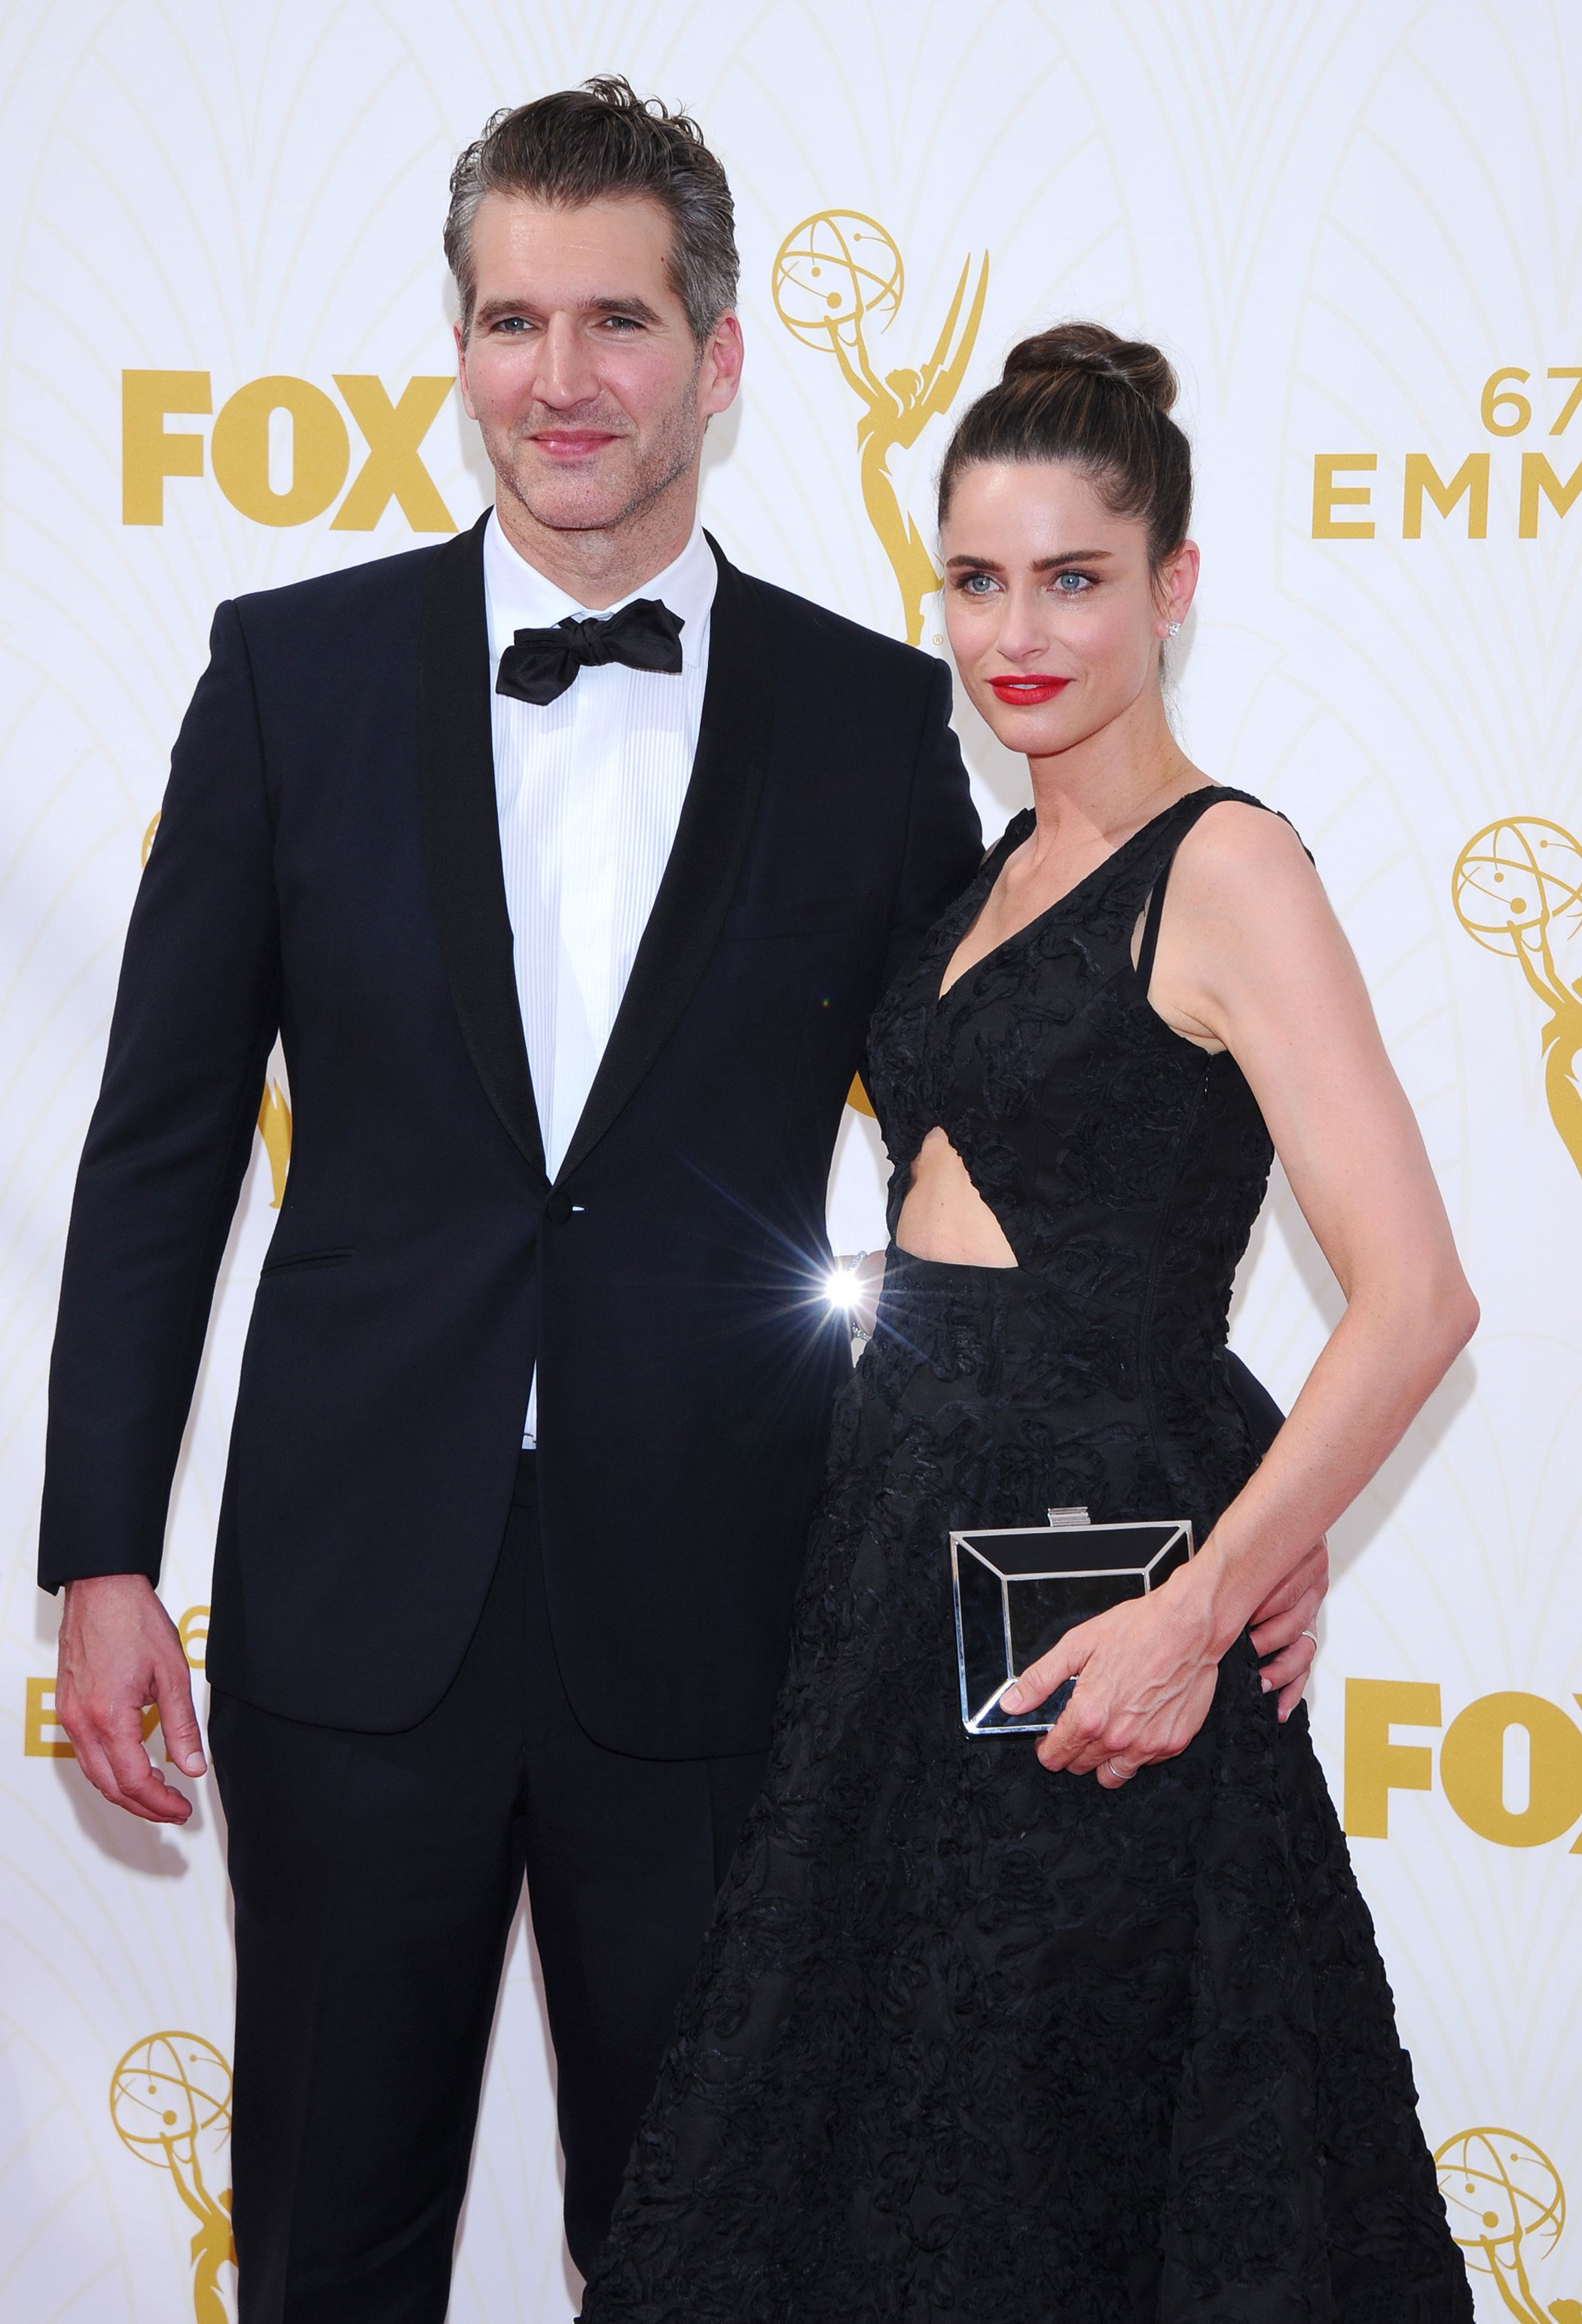 67th Emmys Awards - David Benioff and Amanda Peet - 2015